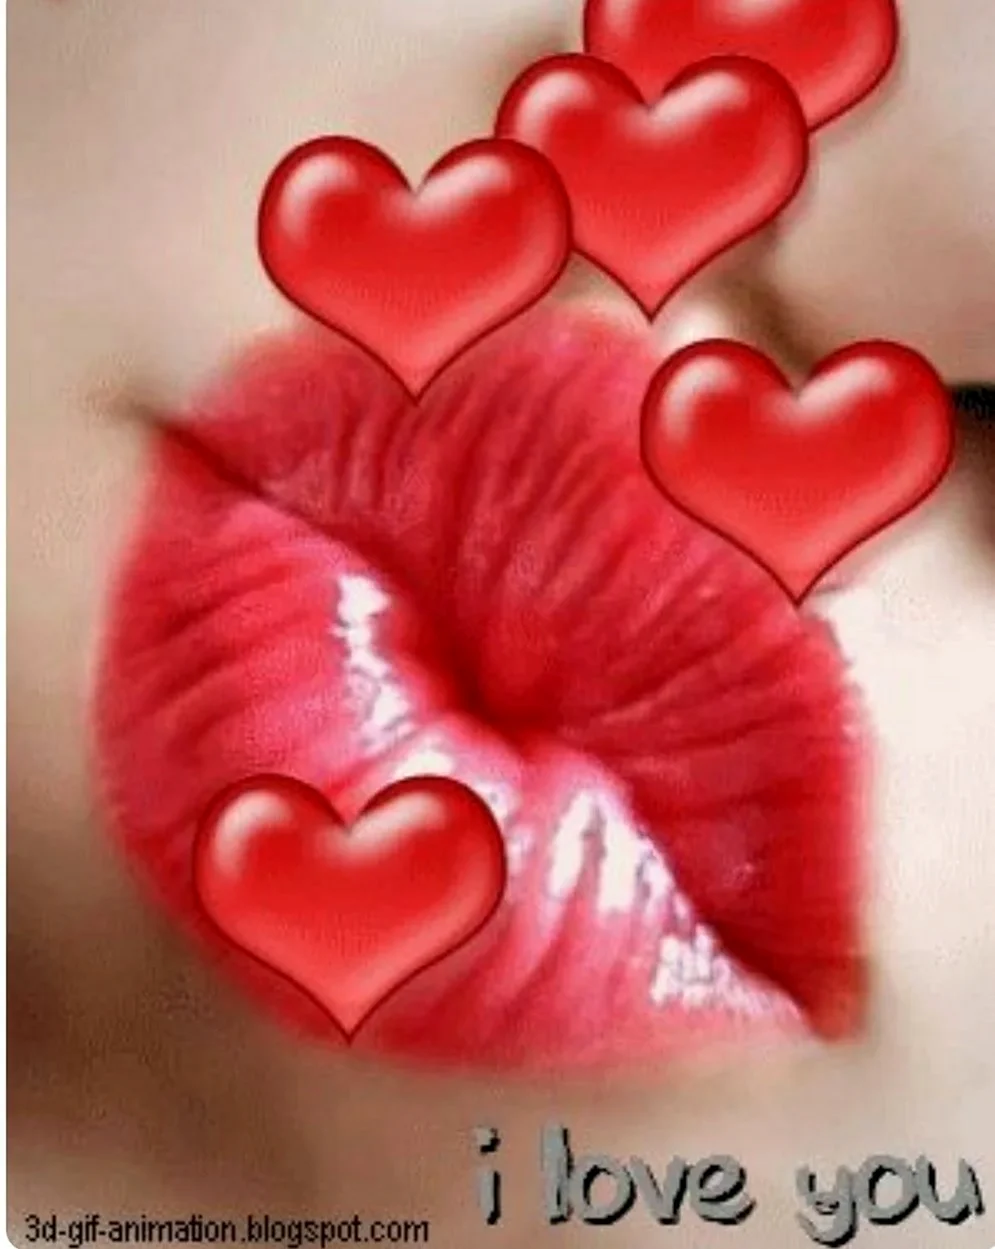 Сердечки поцелуйчики. Красивая картинка